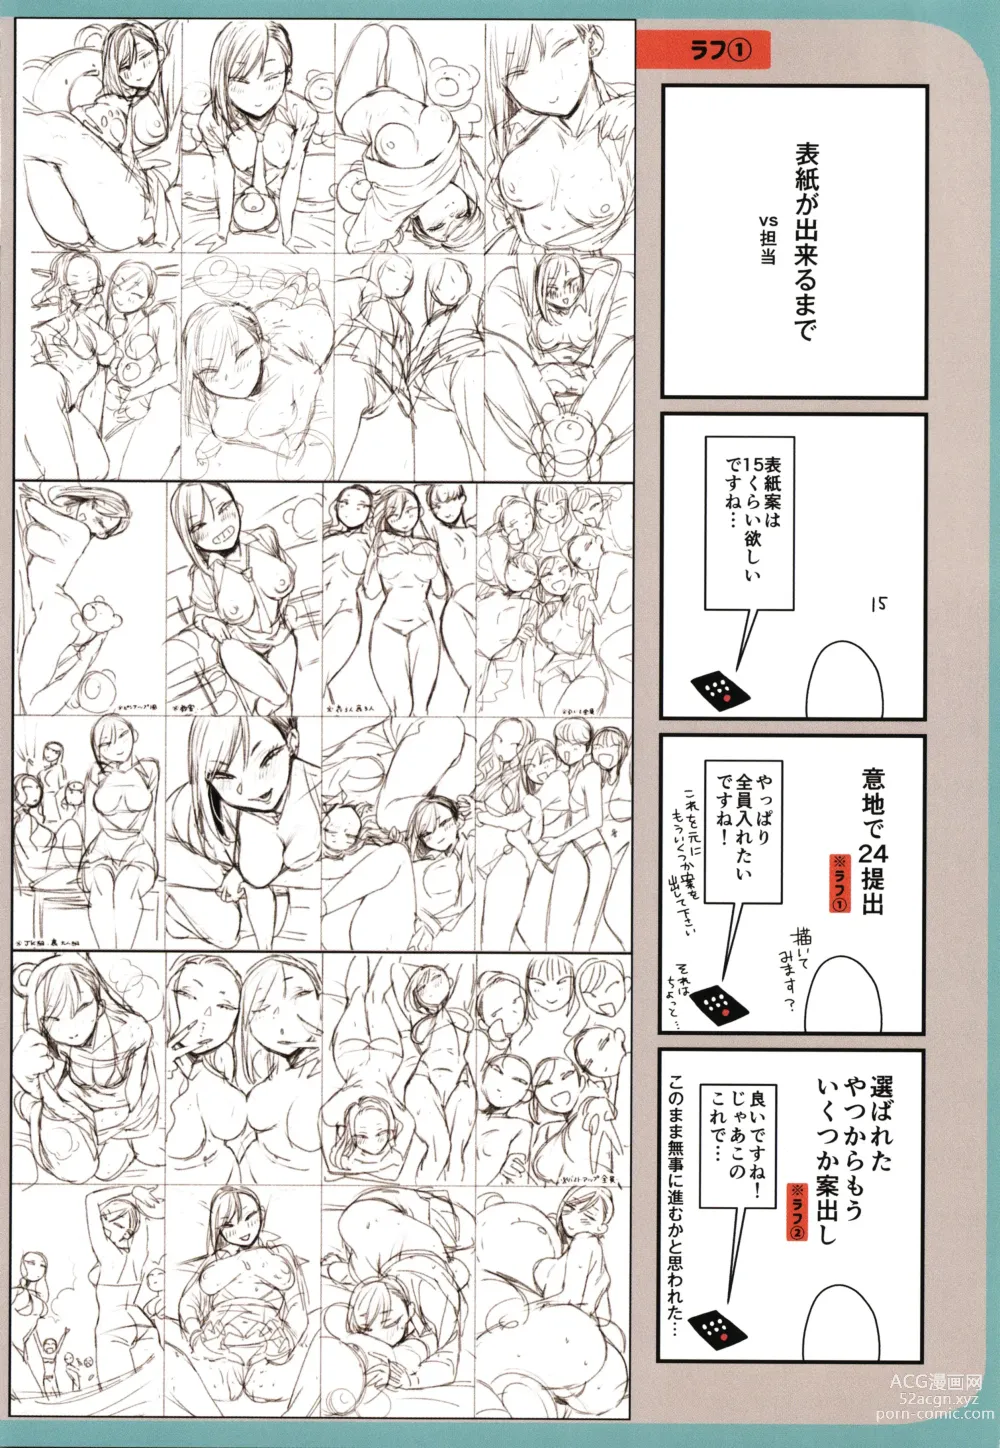 Page 213 of manga Kuro Gal a La Carte + Toranoana Kounyuu Tokuten 4P Leaflet